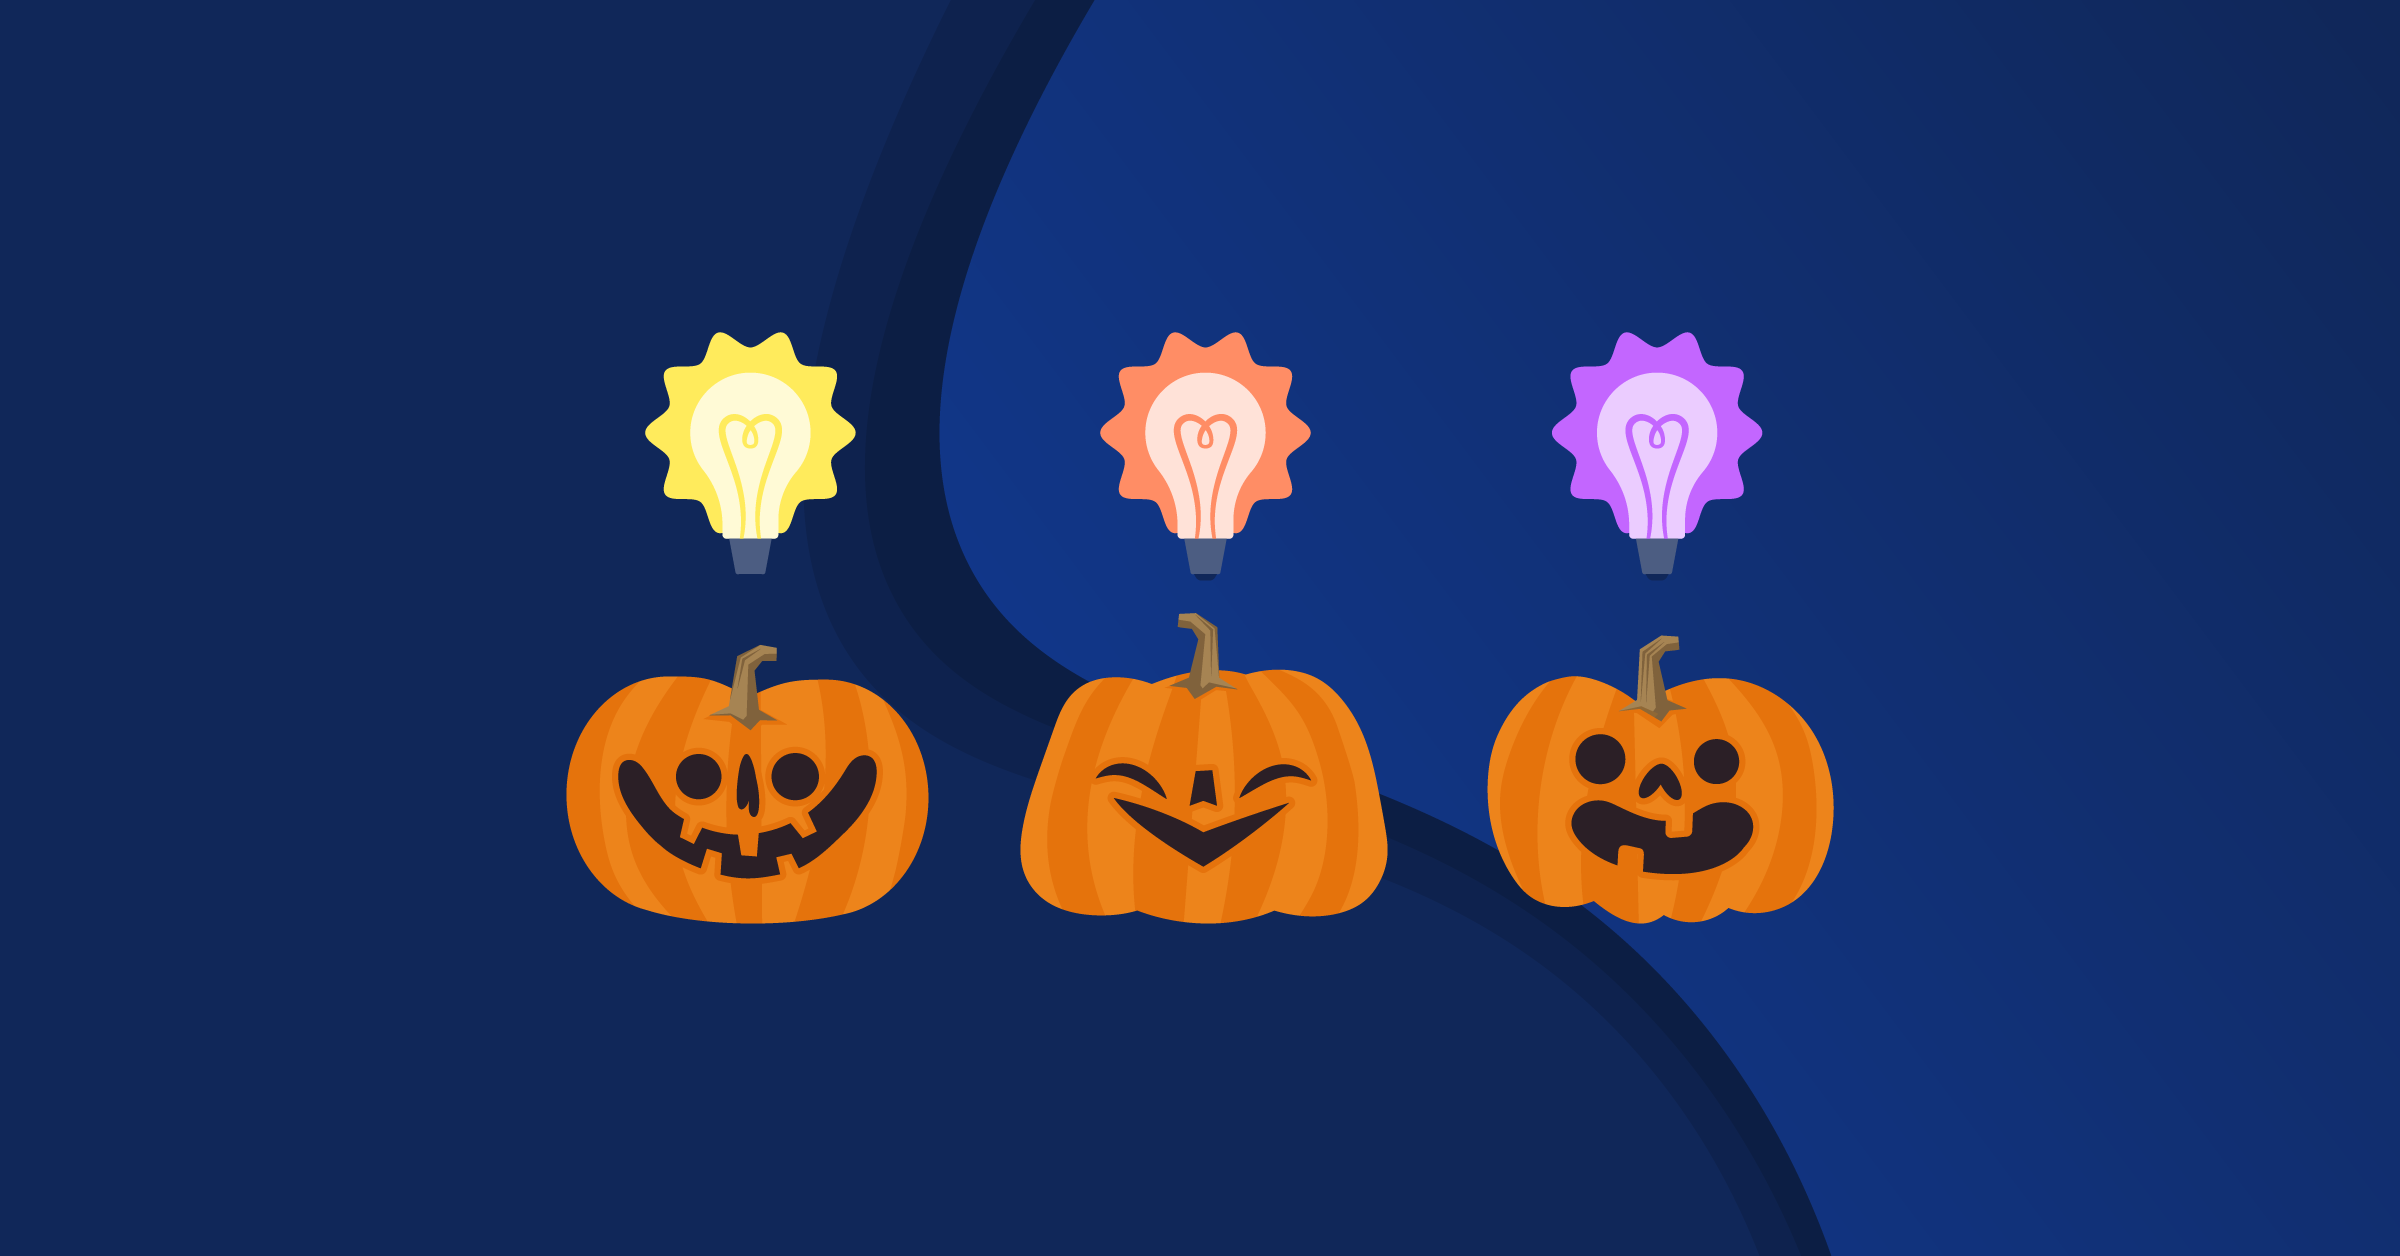 halloween giveaway ideas examples 2020